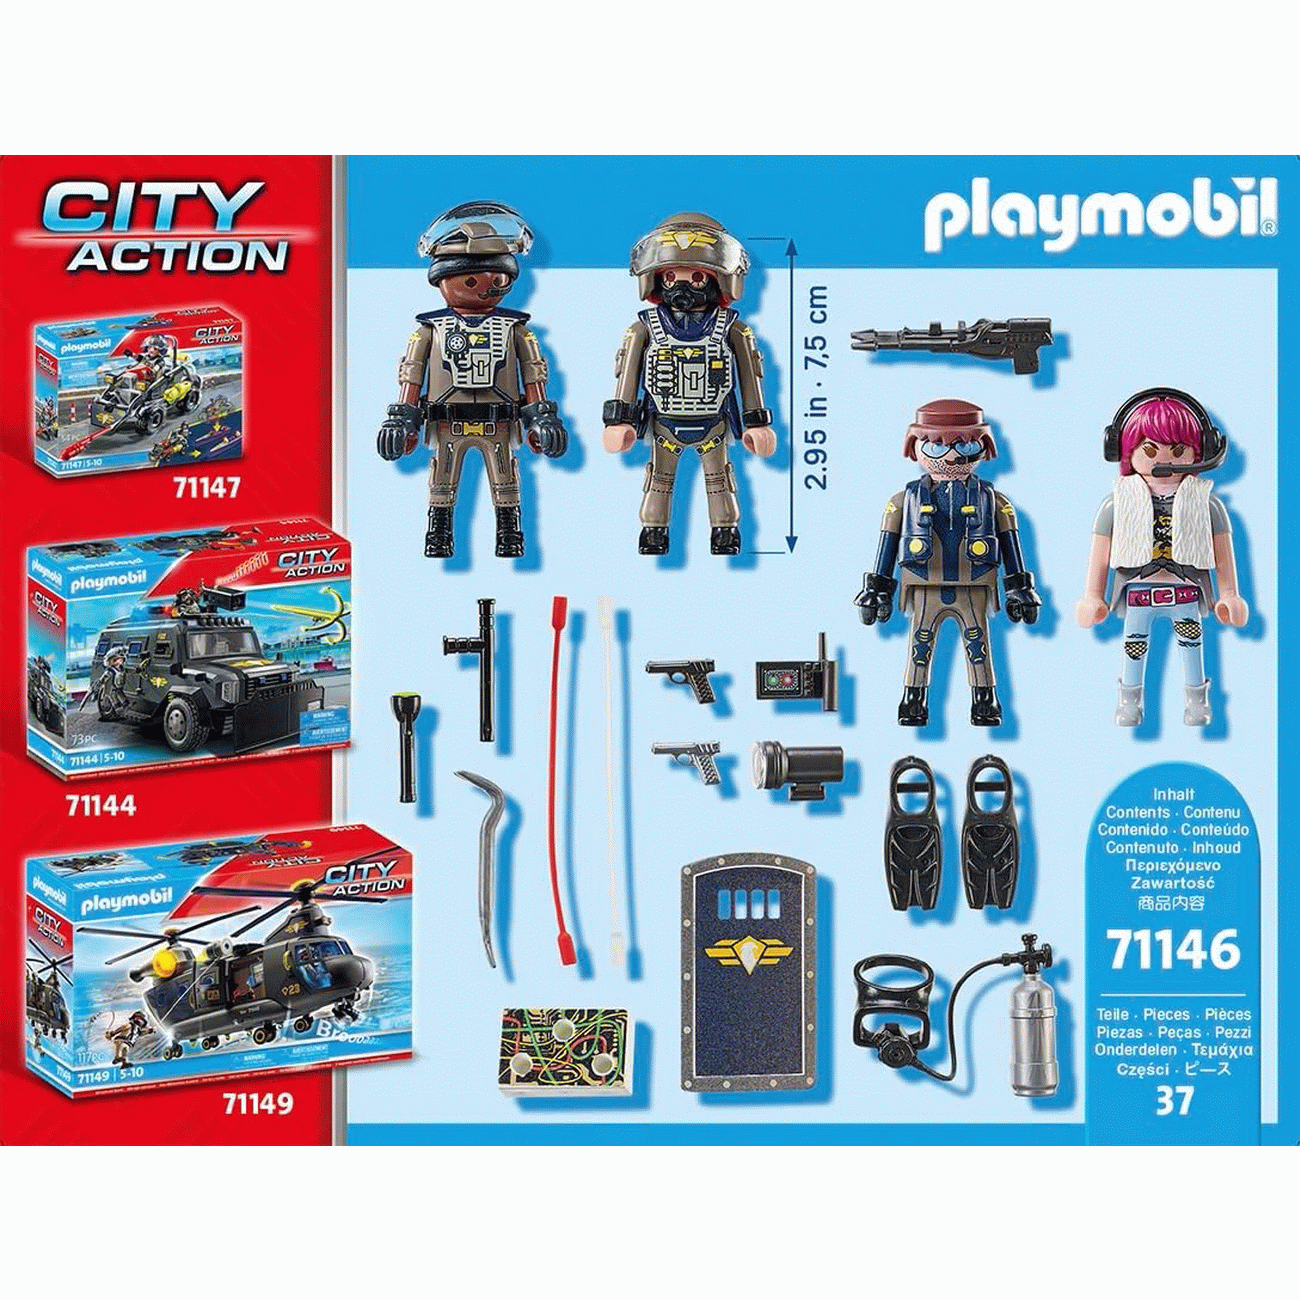 Playmobil 71146 - SWAT Figurenset - City Action